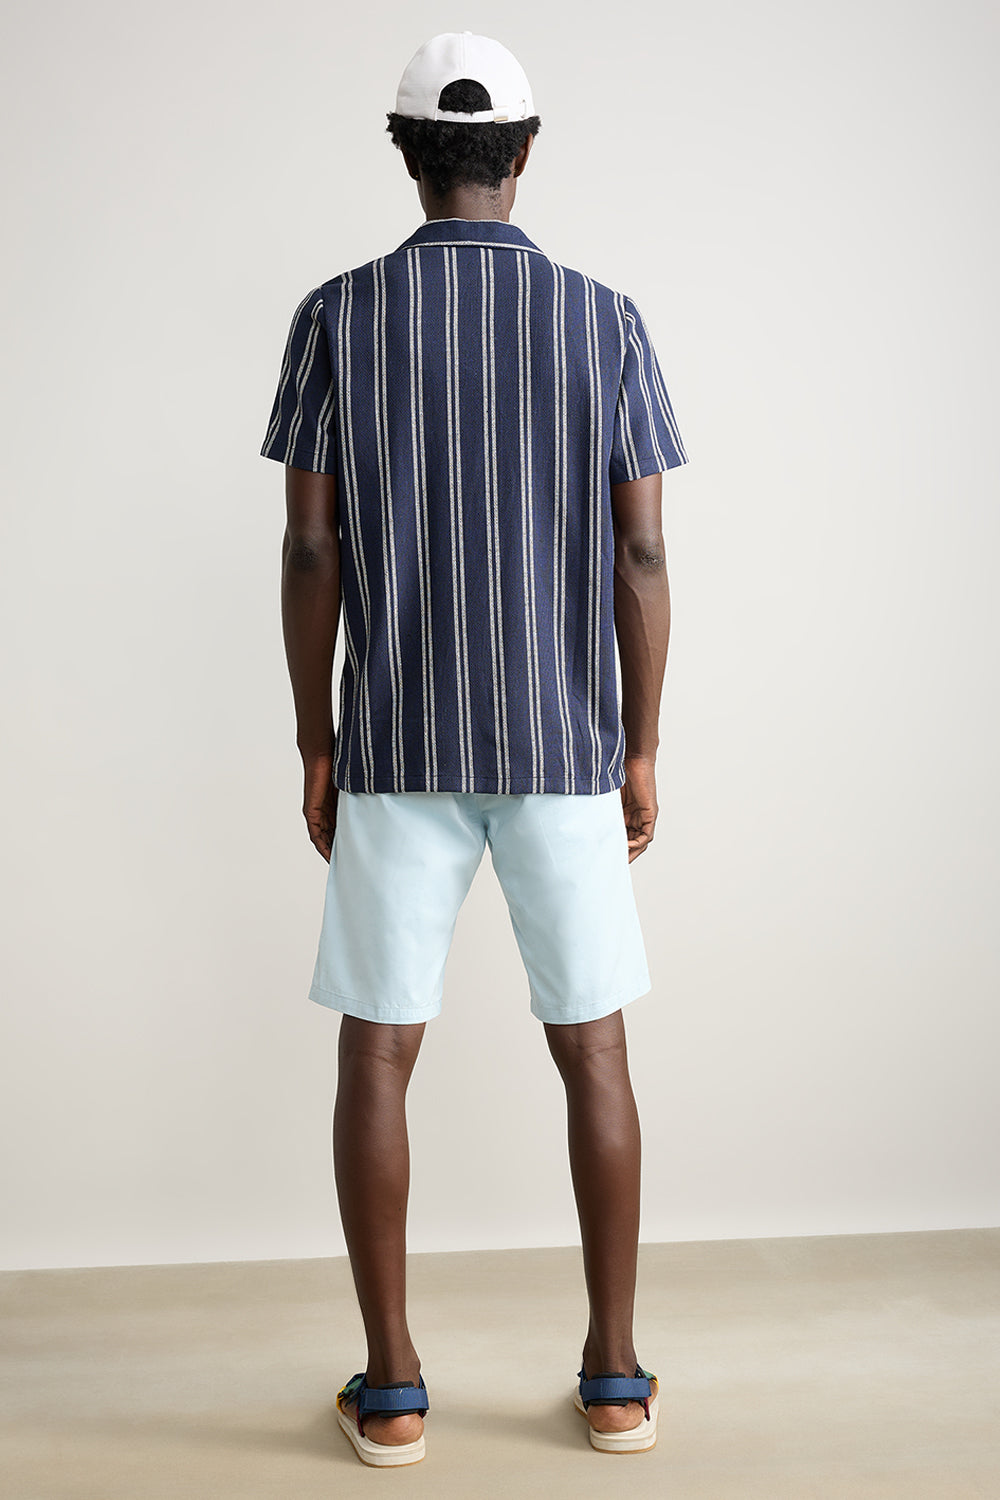 Matty Oversized Men's Shirt - Navy/White Stripe